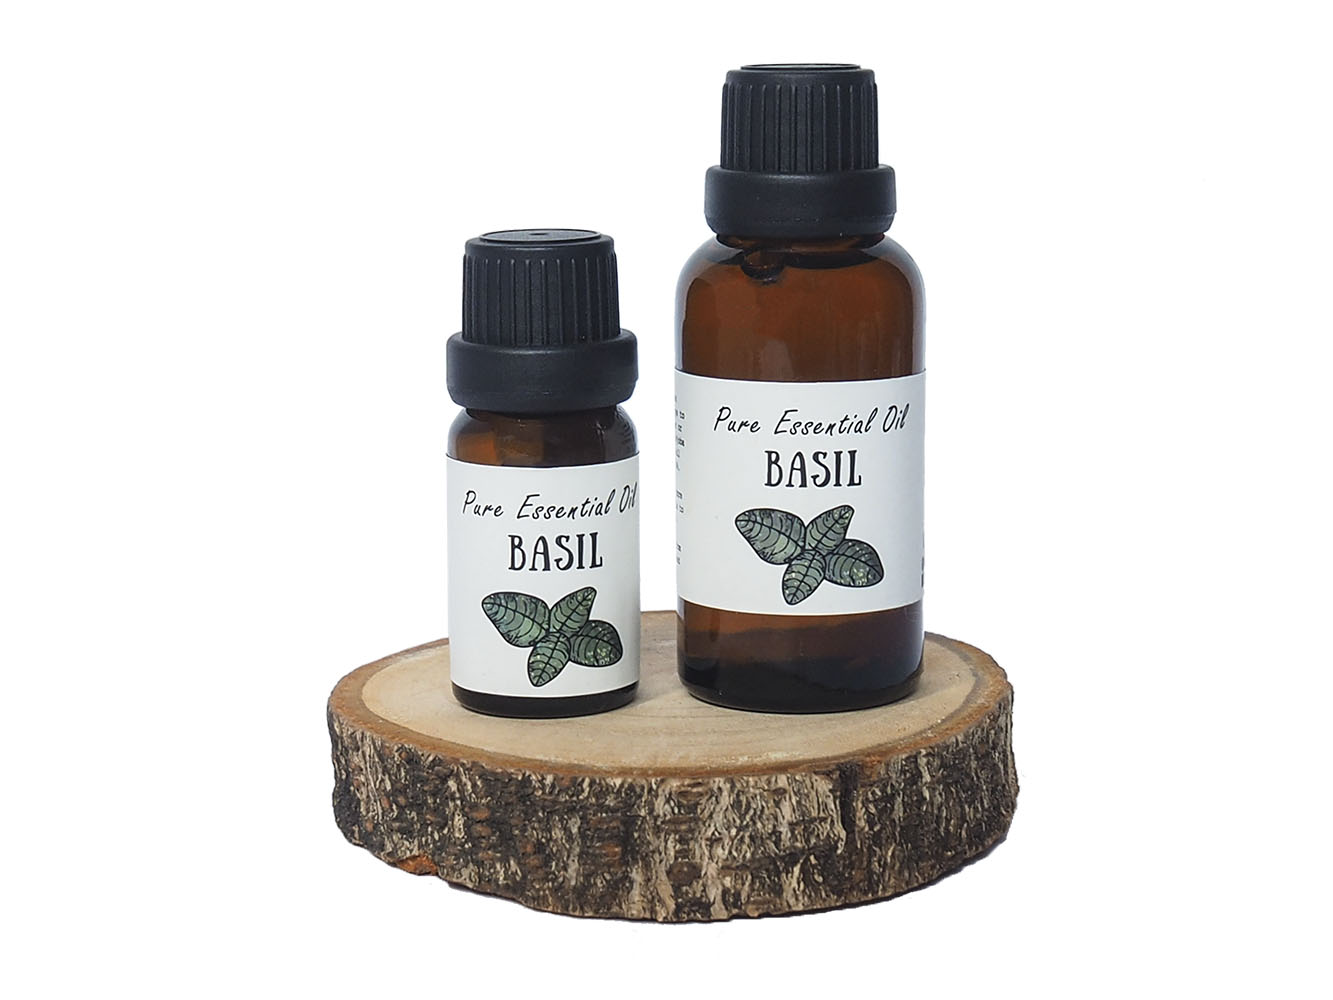 Basil essential oil blue moon natural skincare